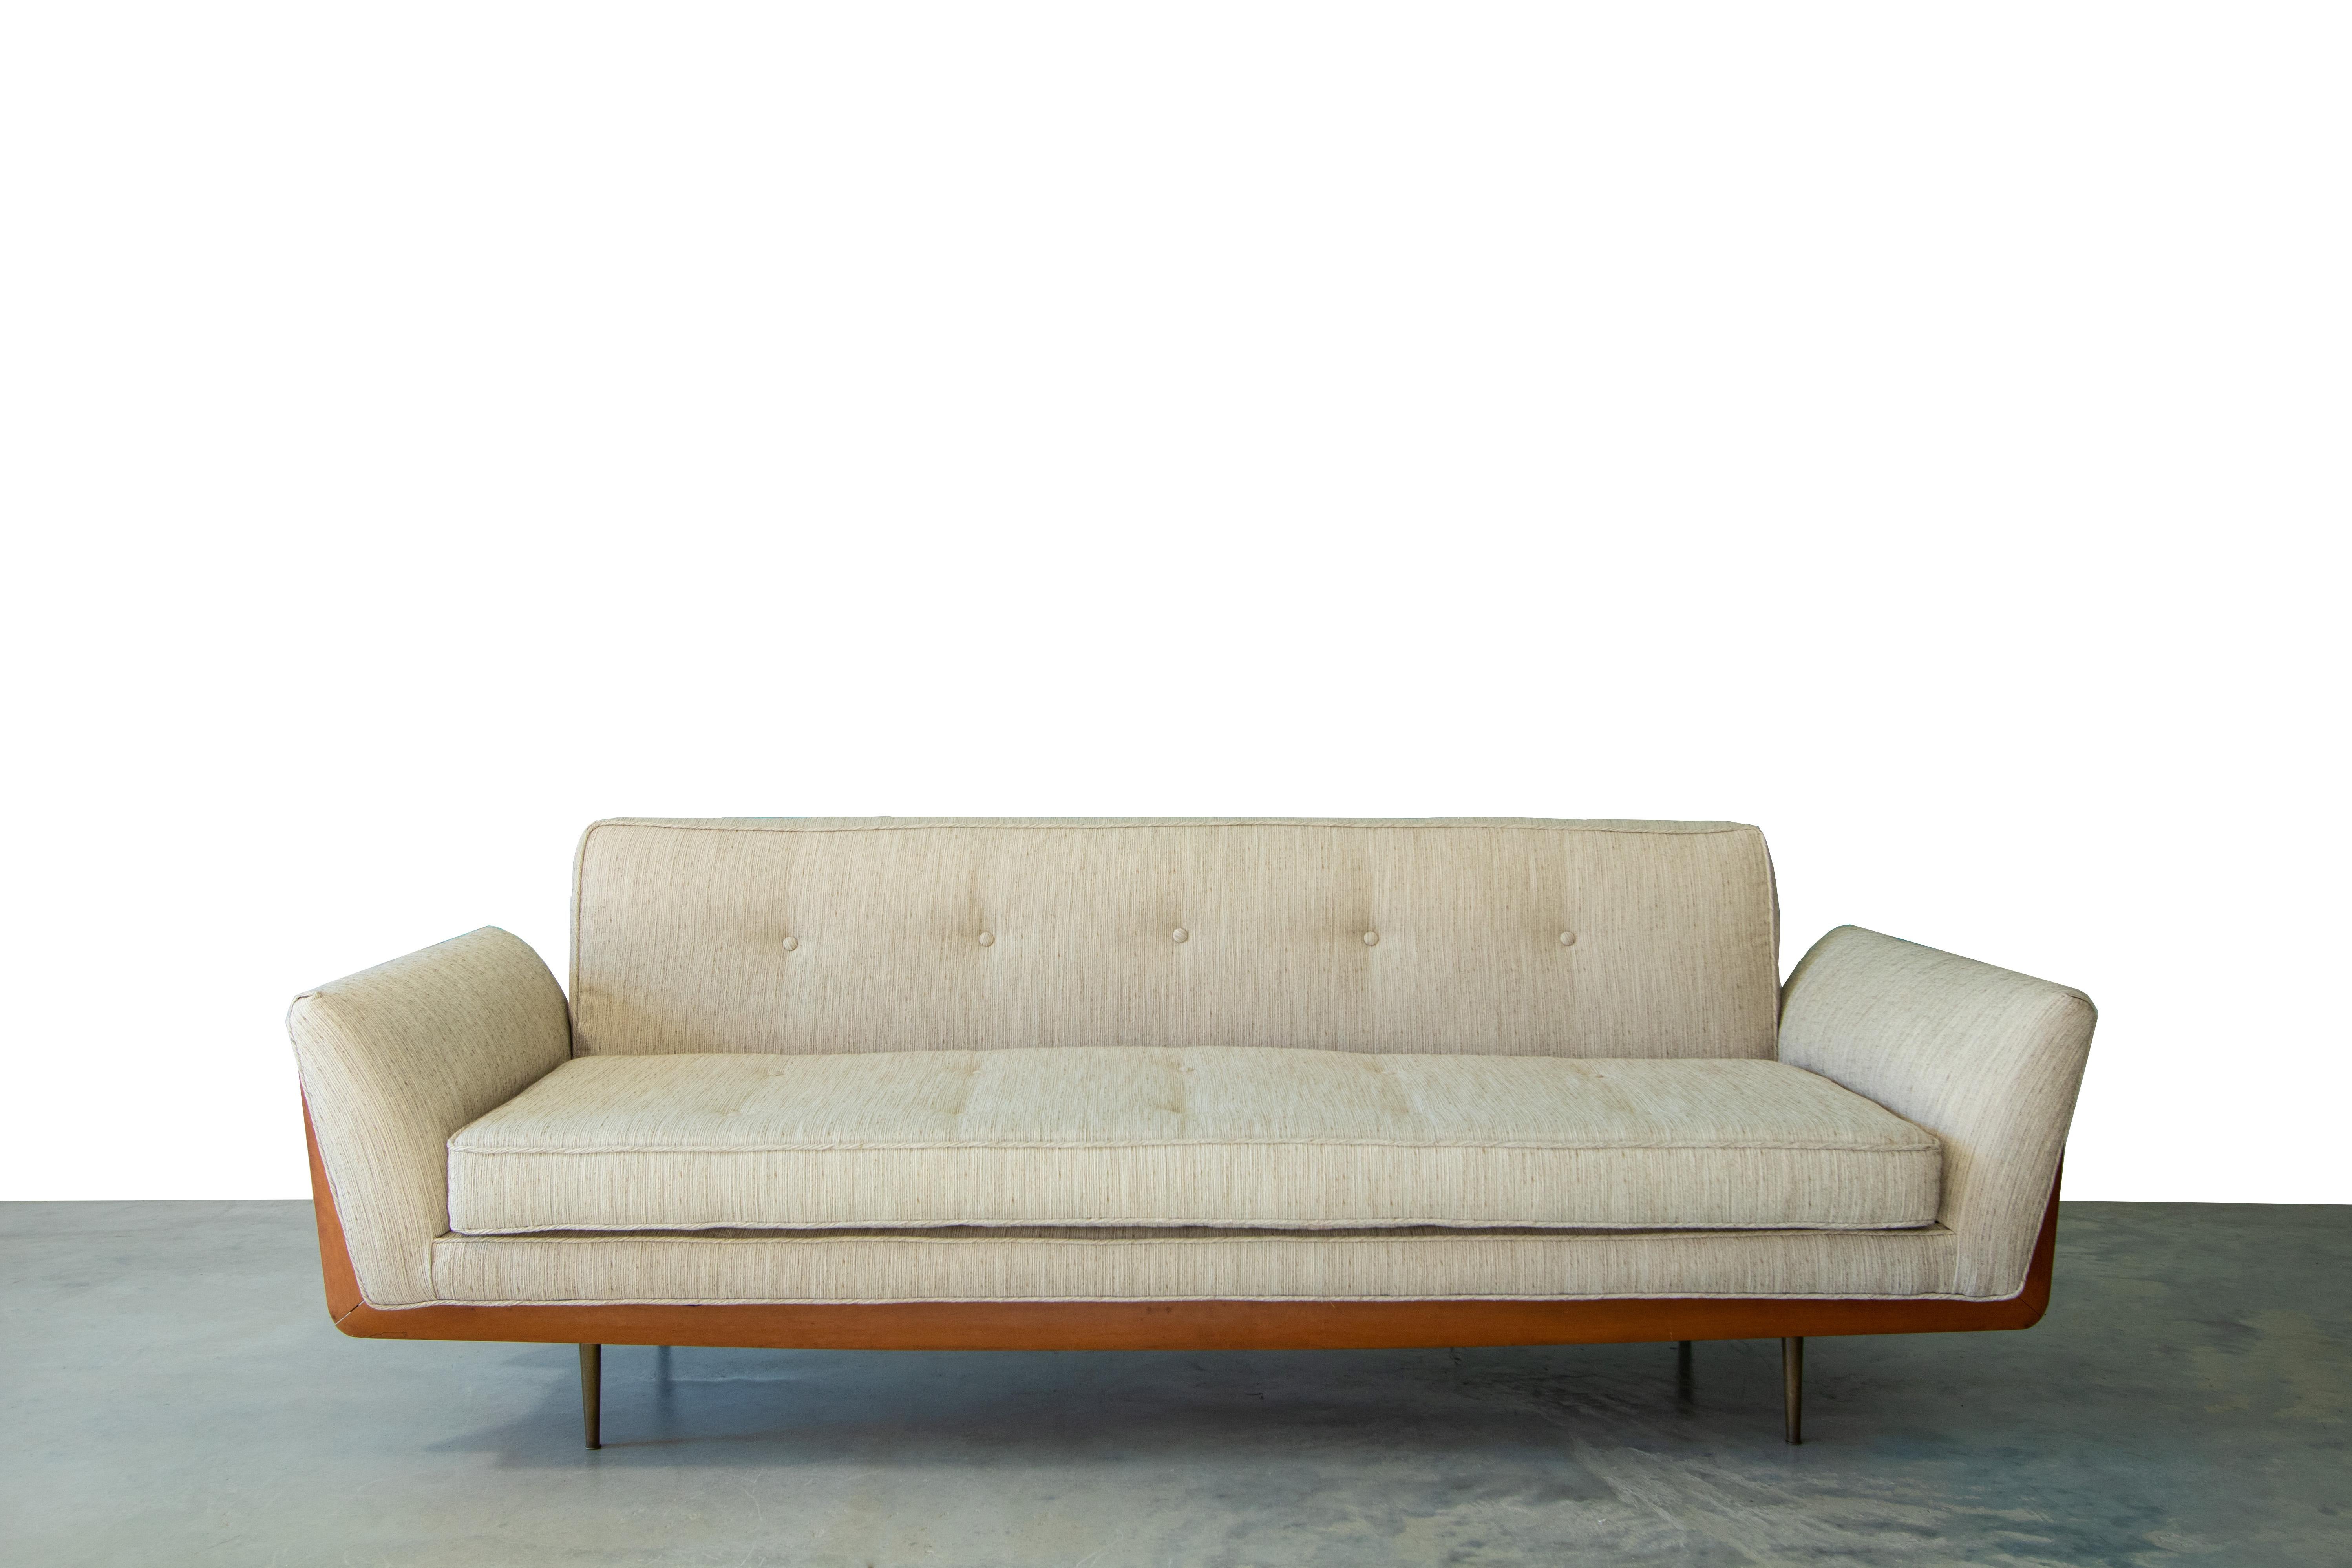 American Artcraft Mid-Century Modern Sofa After T.H. Robsjohn Gibbings with Brass Legs